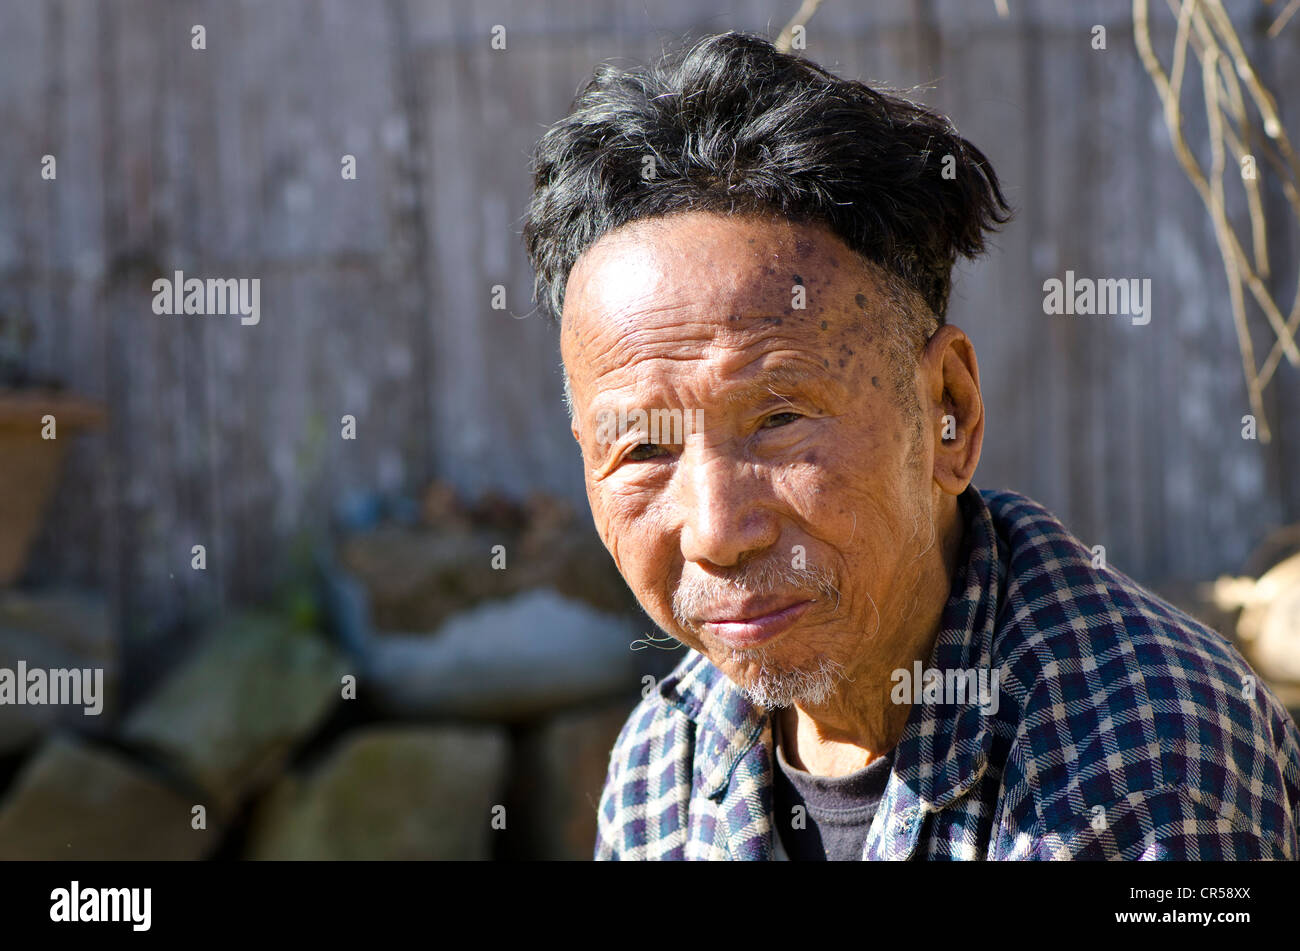 Man of the Ao tribe with traditional hairdo, Ungma village, Nagaland, India, Asia Stock Photo